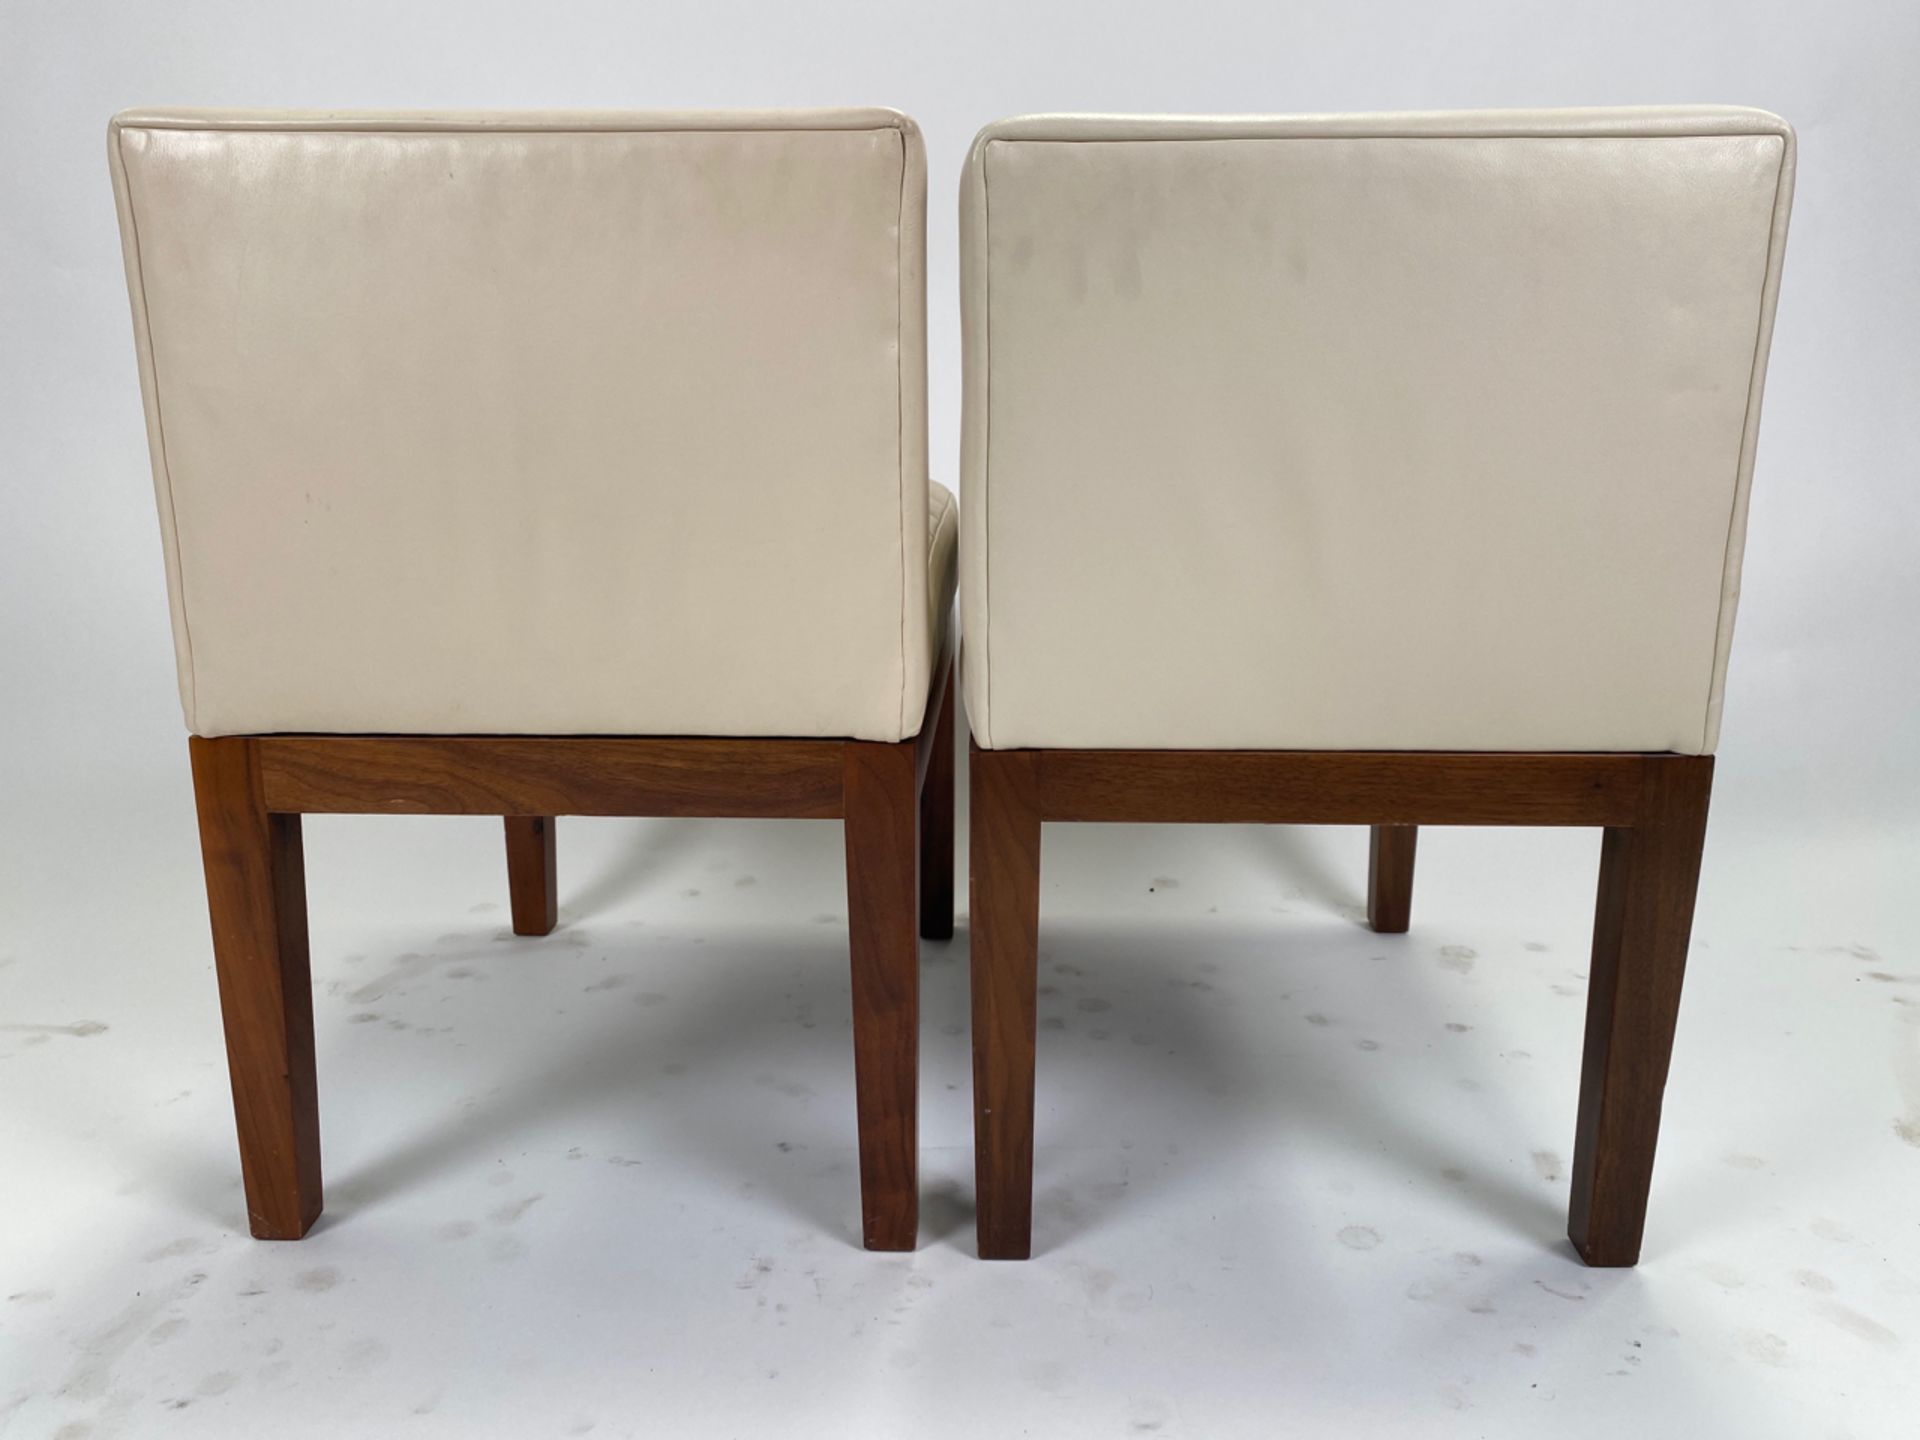 Set of 4 Cream Bench Seats - Image 4 of 4